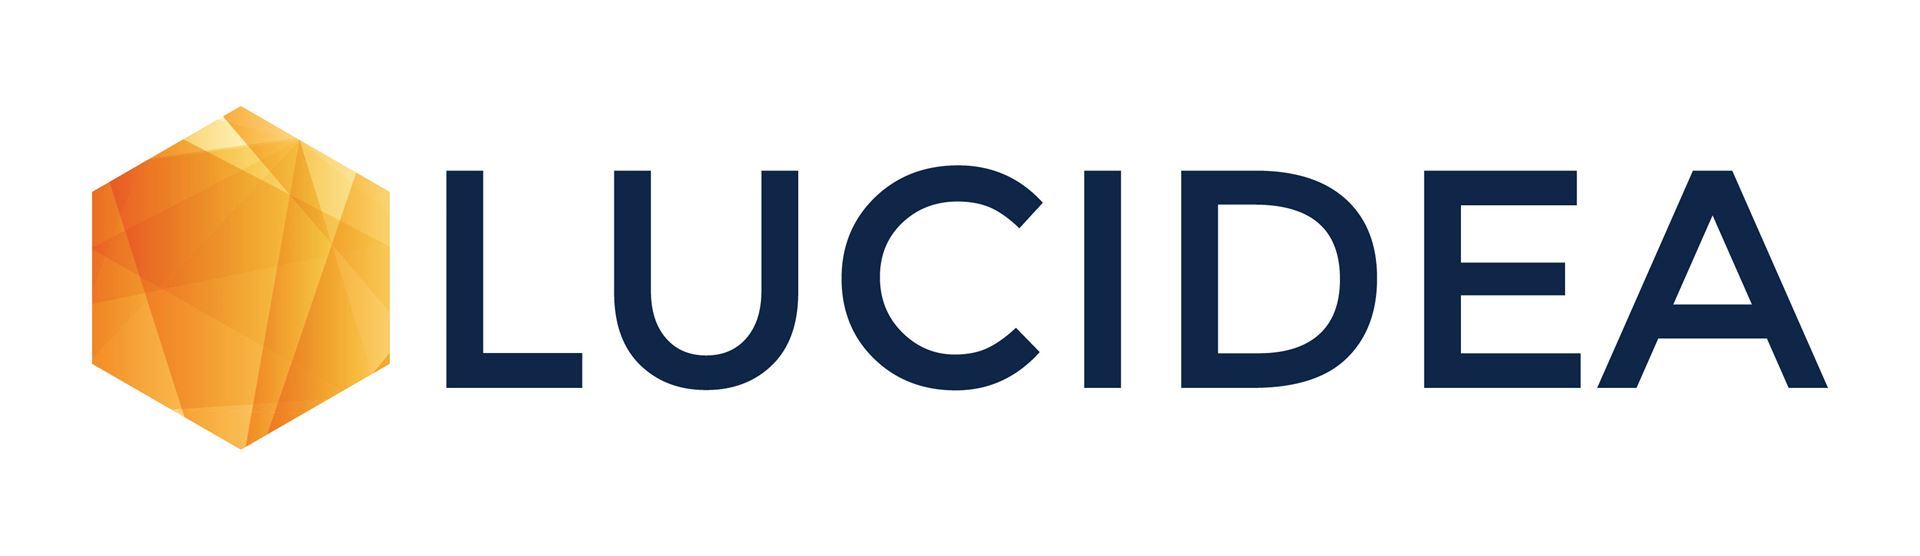 Lucidea logo